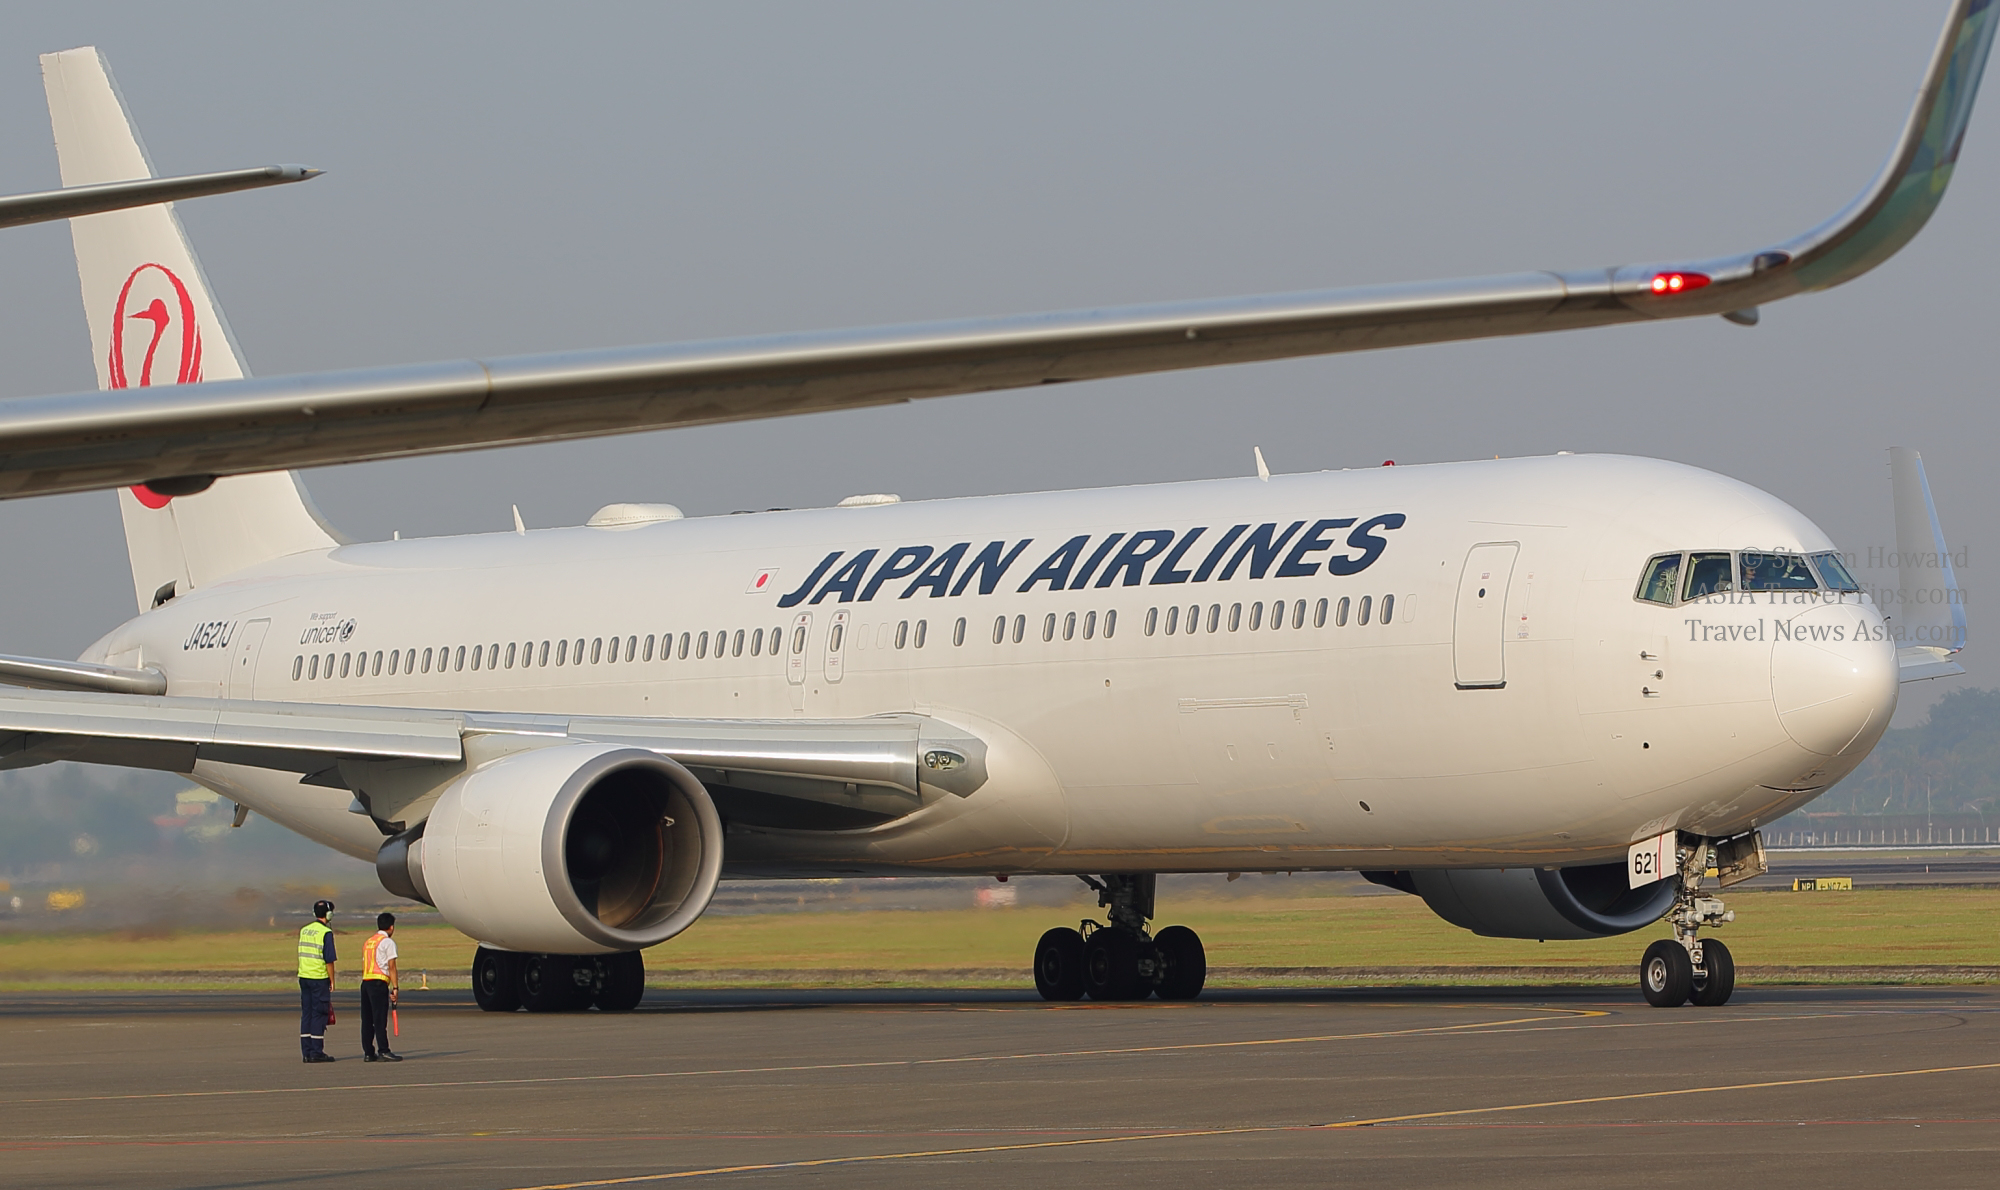 Japan Airlines Boeing 767 reg: JA621J. Picture taken by Steven Howard of TravelNewsAsia.com Click to enlarge.